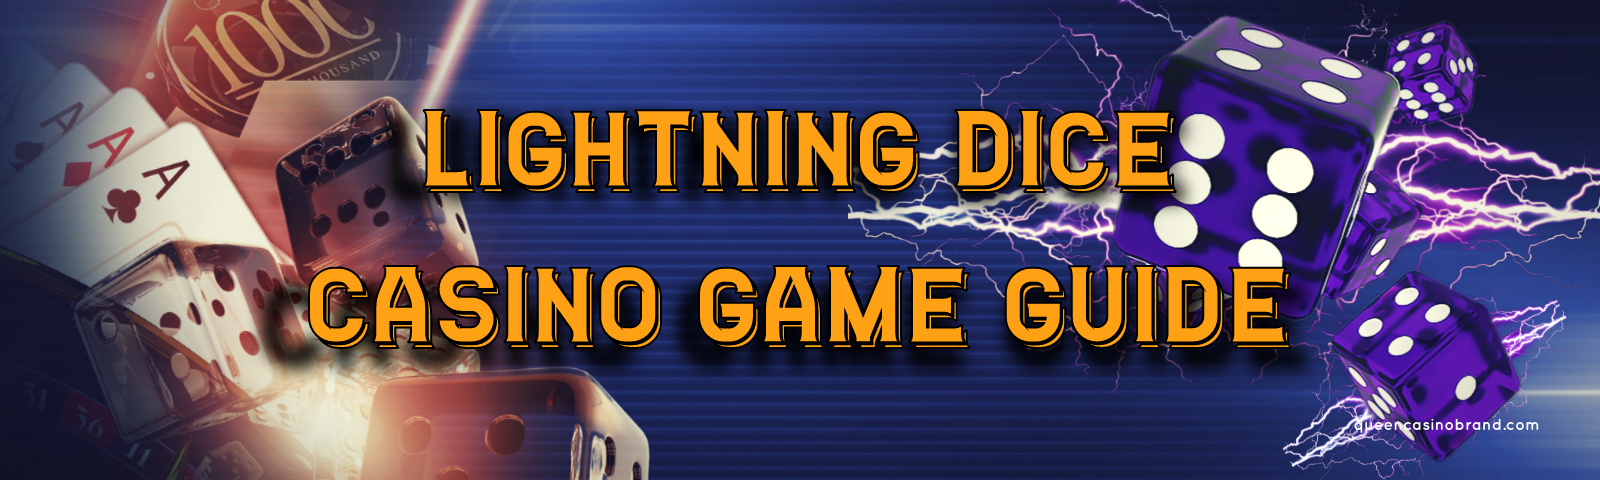 Lightning Dice Casino Game Guide | Queen Casino Brand